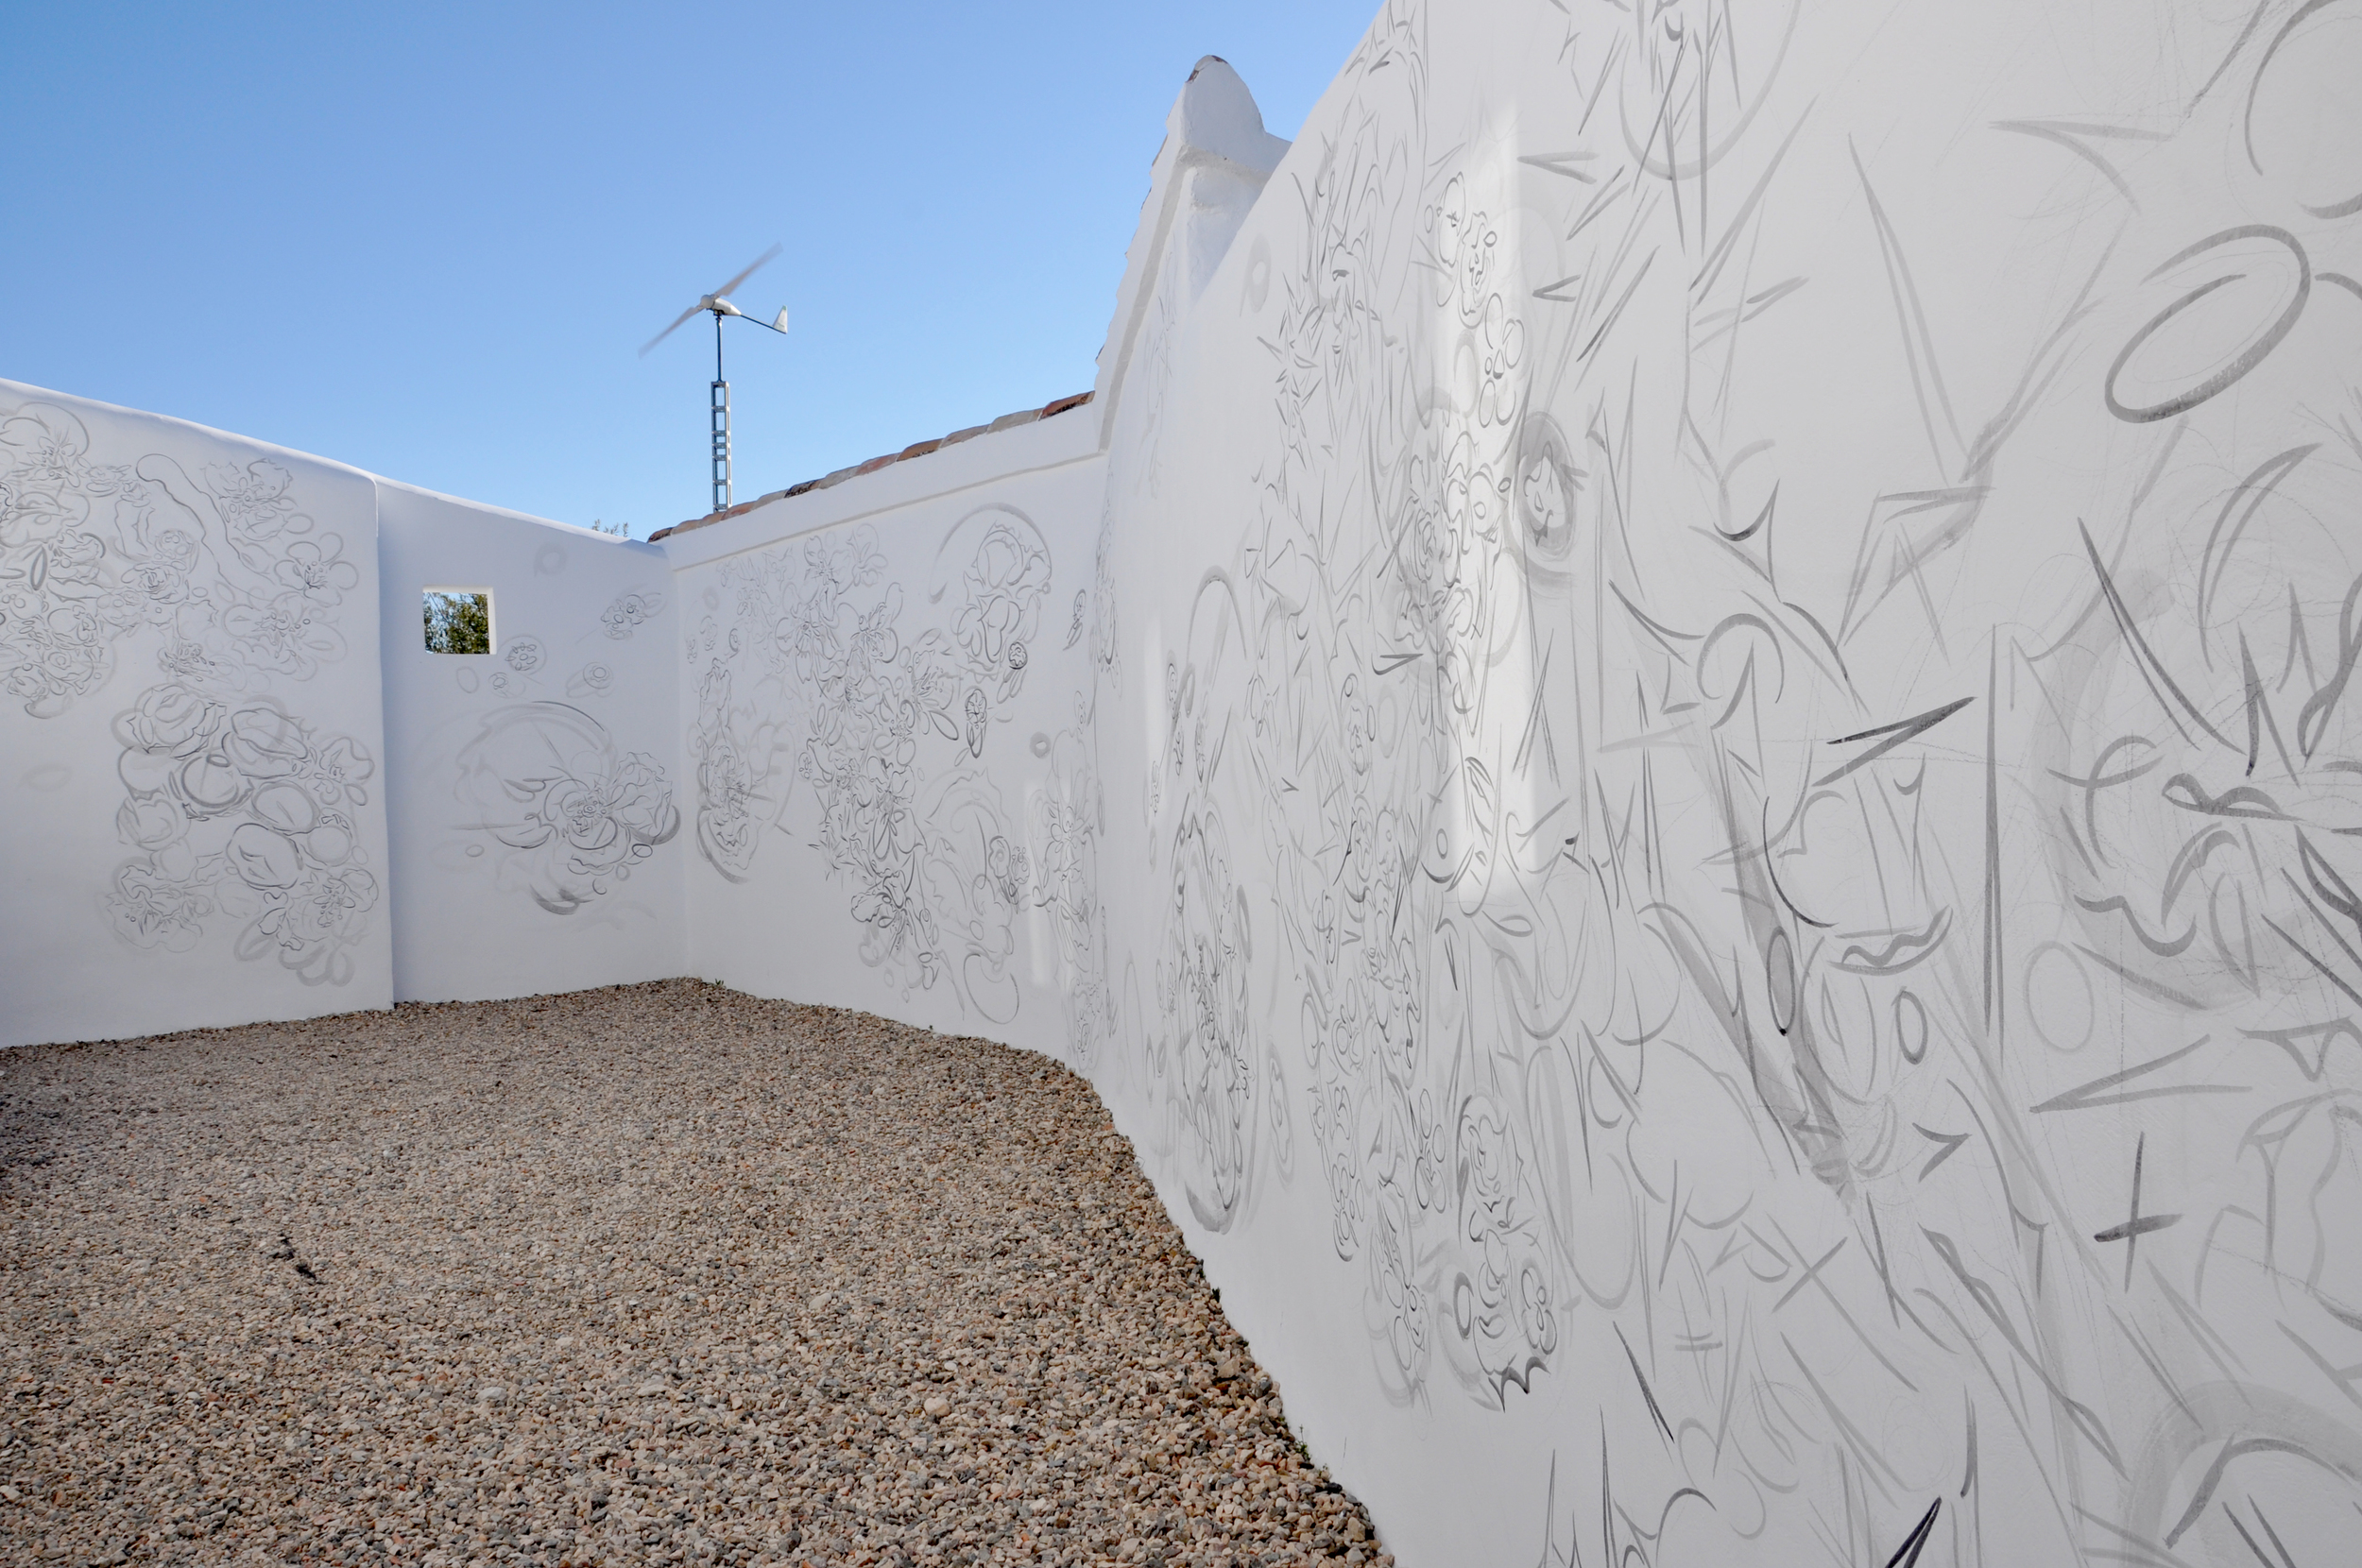    SUNTRAP,  2011, acrylic on wall.&nbsp;   Joya: arte + ecología, &nbsp;Cortijada Los Gázquez, Vélez Blanco (Almería), Spain  